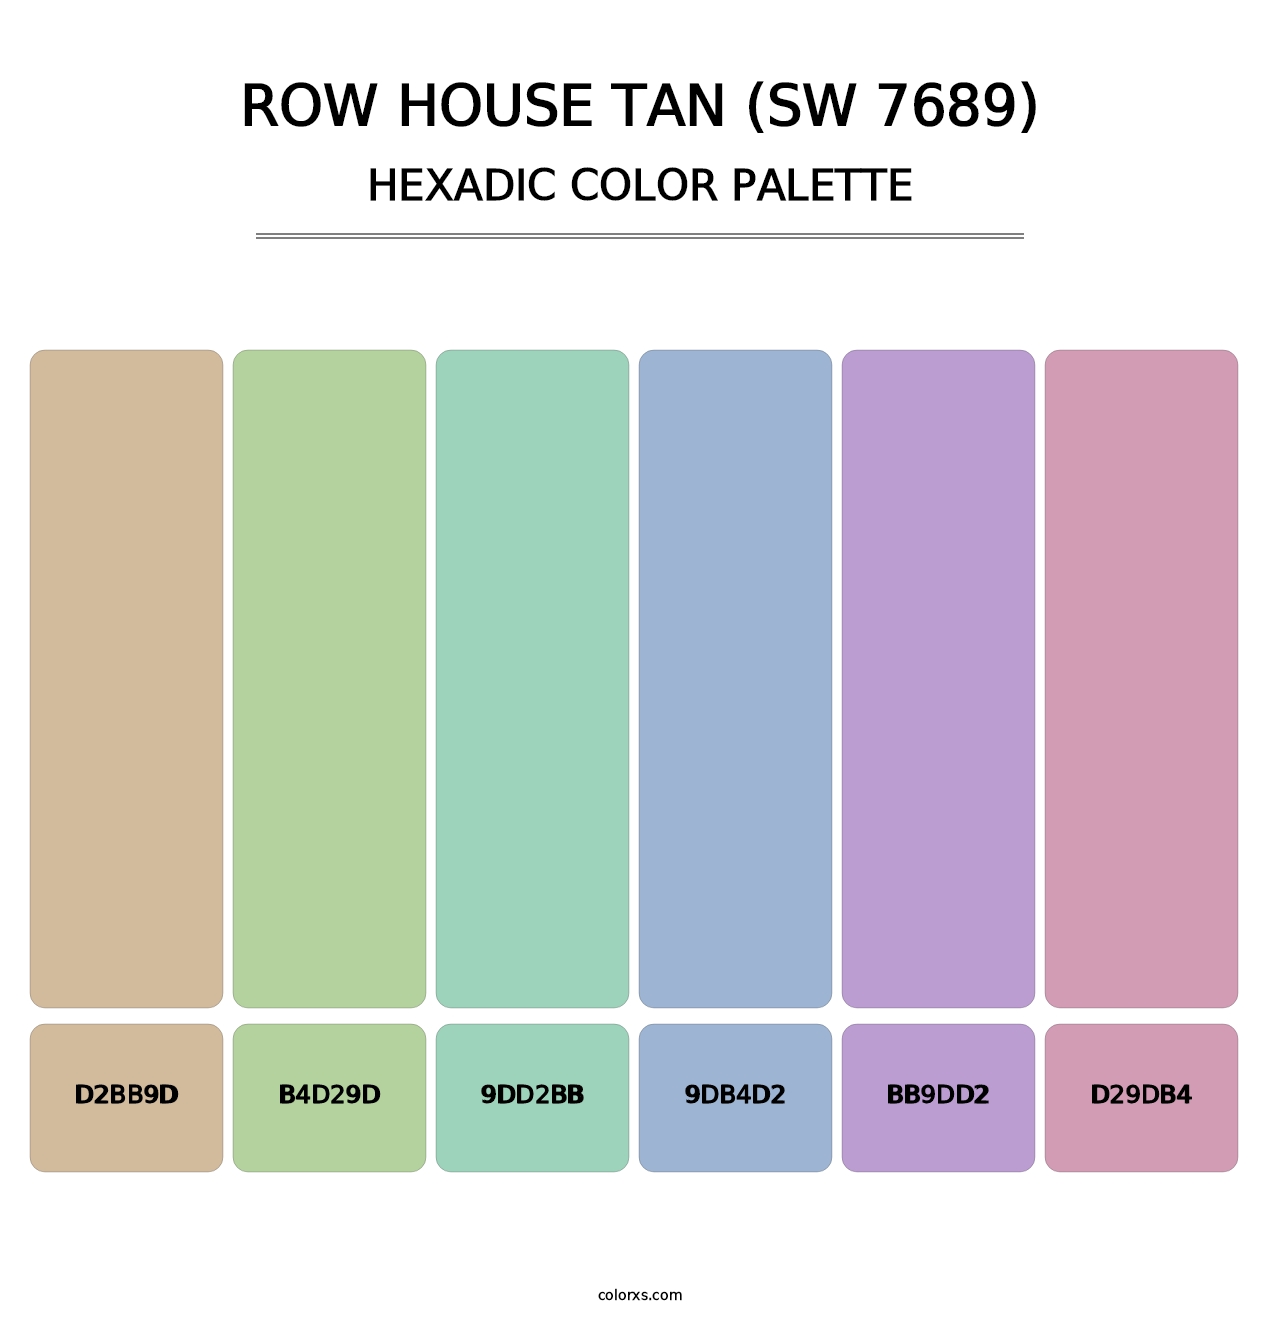 Row House Tan (SW 7689) - Hexadic Color Palette